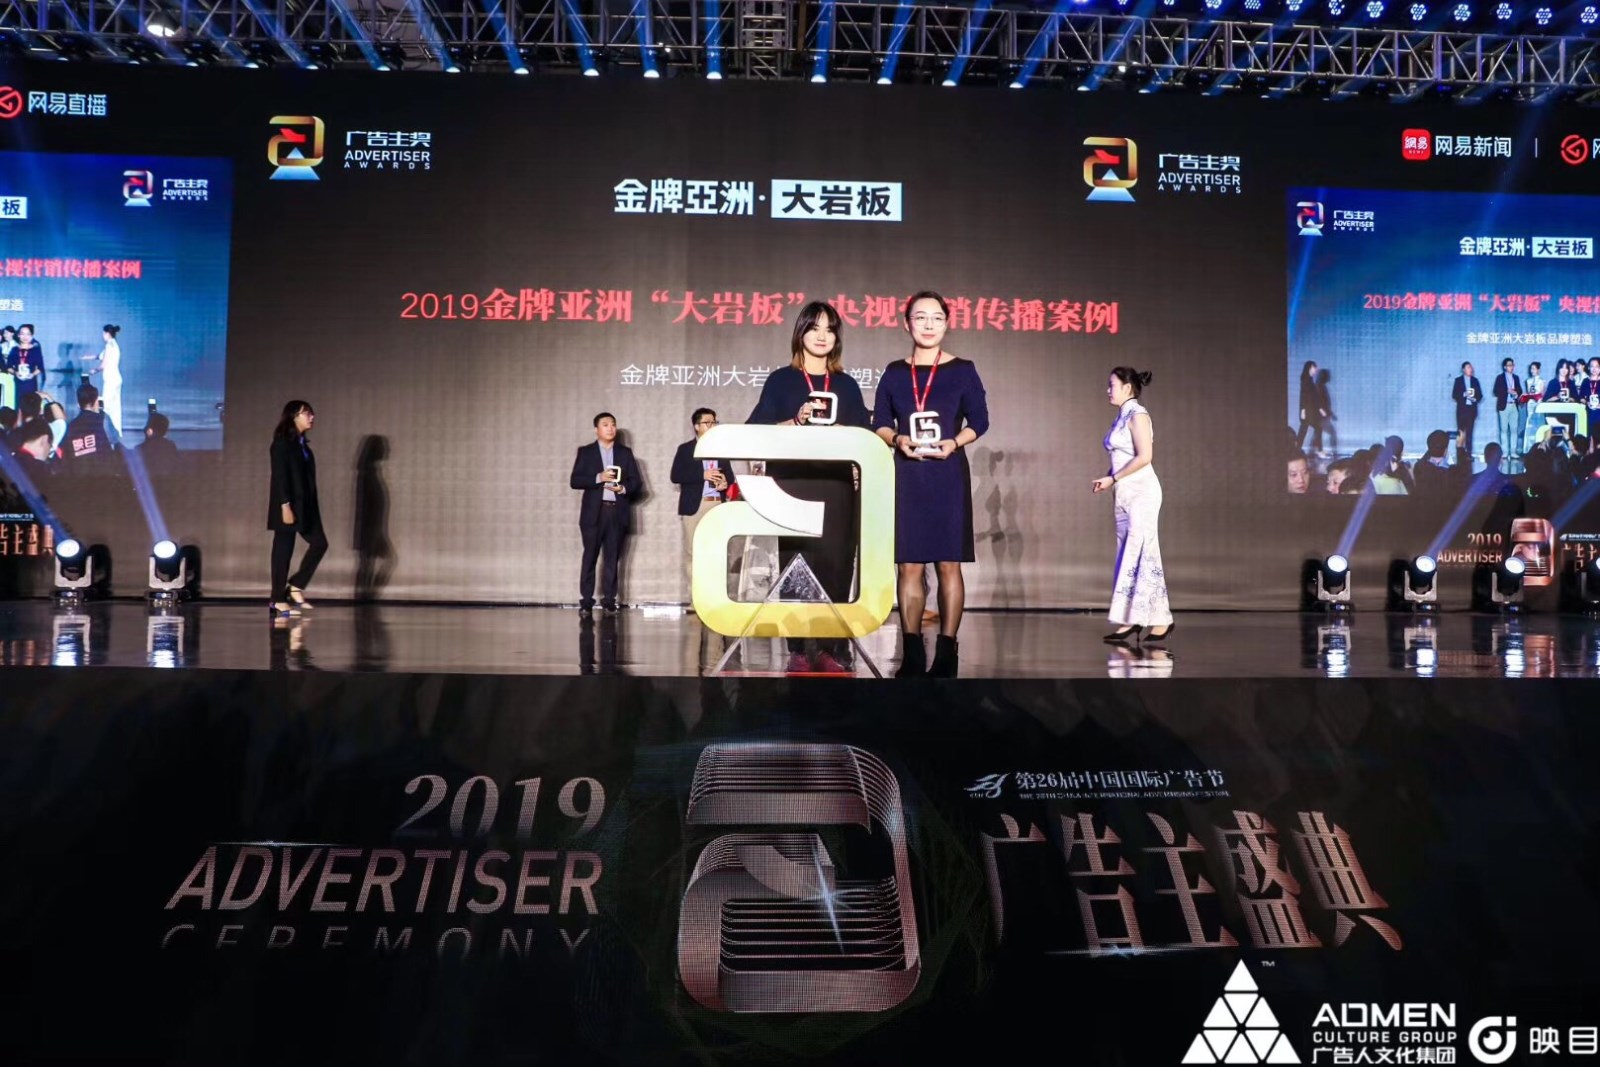 Gold Medal won the China International Advertising Festival